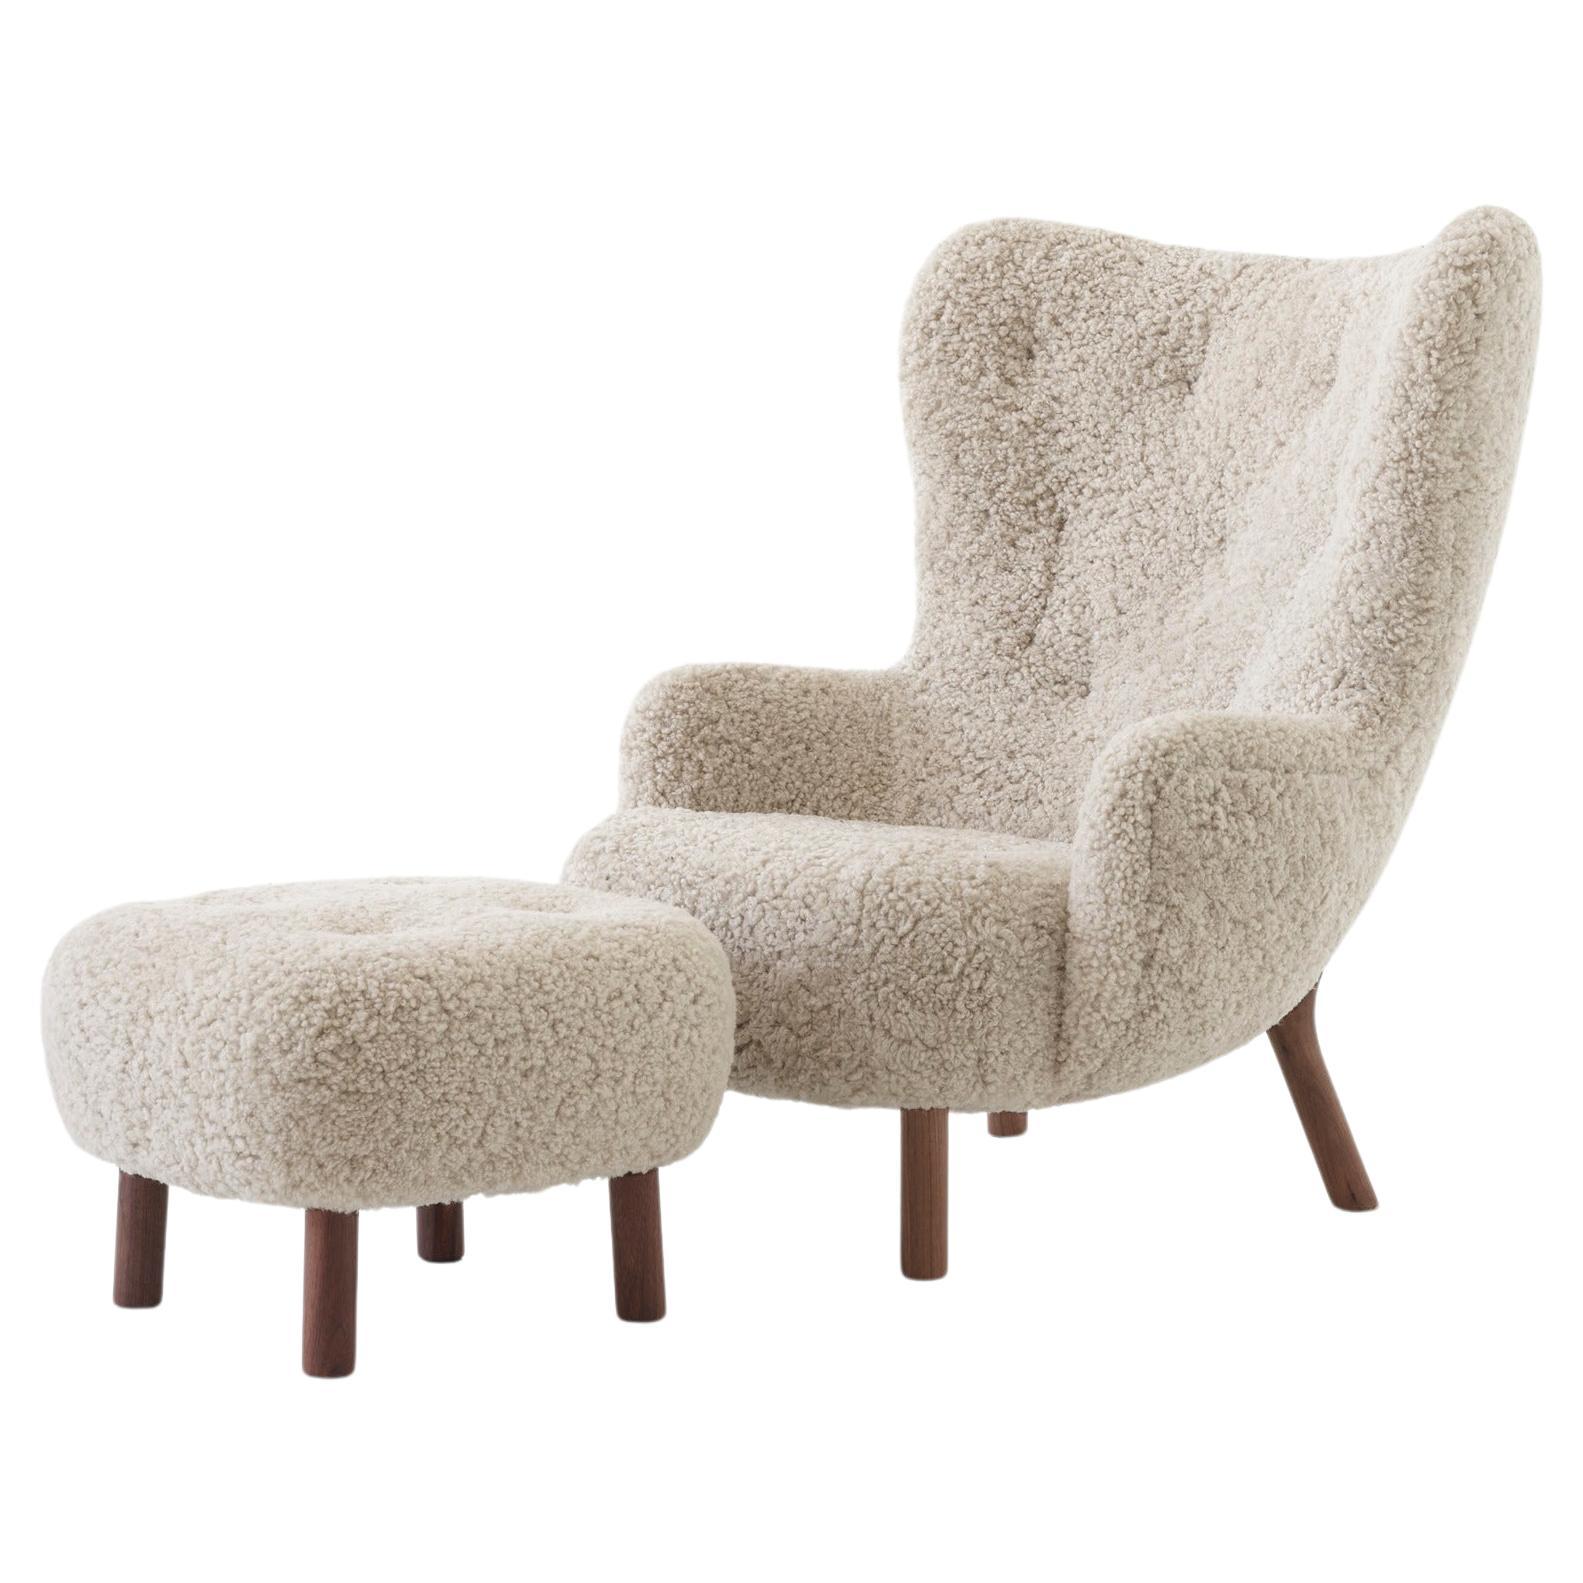 Viggo Boesen Lounge Chairs